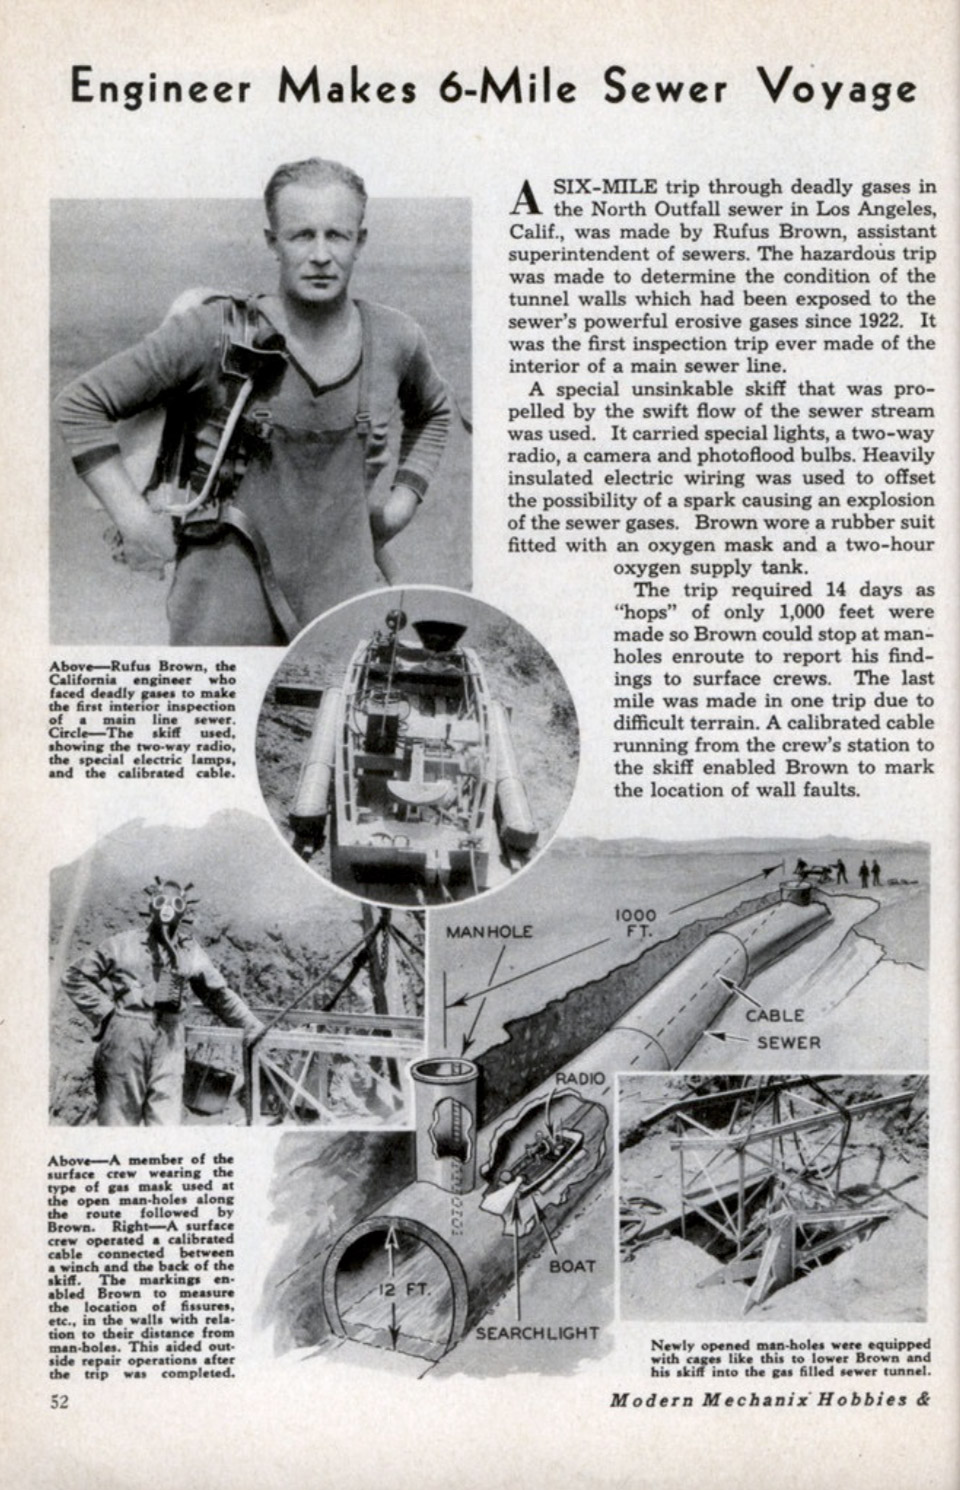 Figure 3. “Modern Mechanix Hobbies & Inventions” October, 1936 (Note: Reuben is misidentified as “Rufus”)